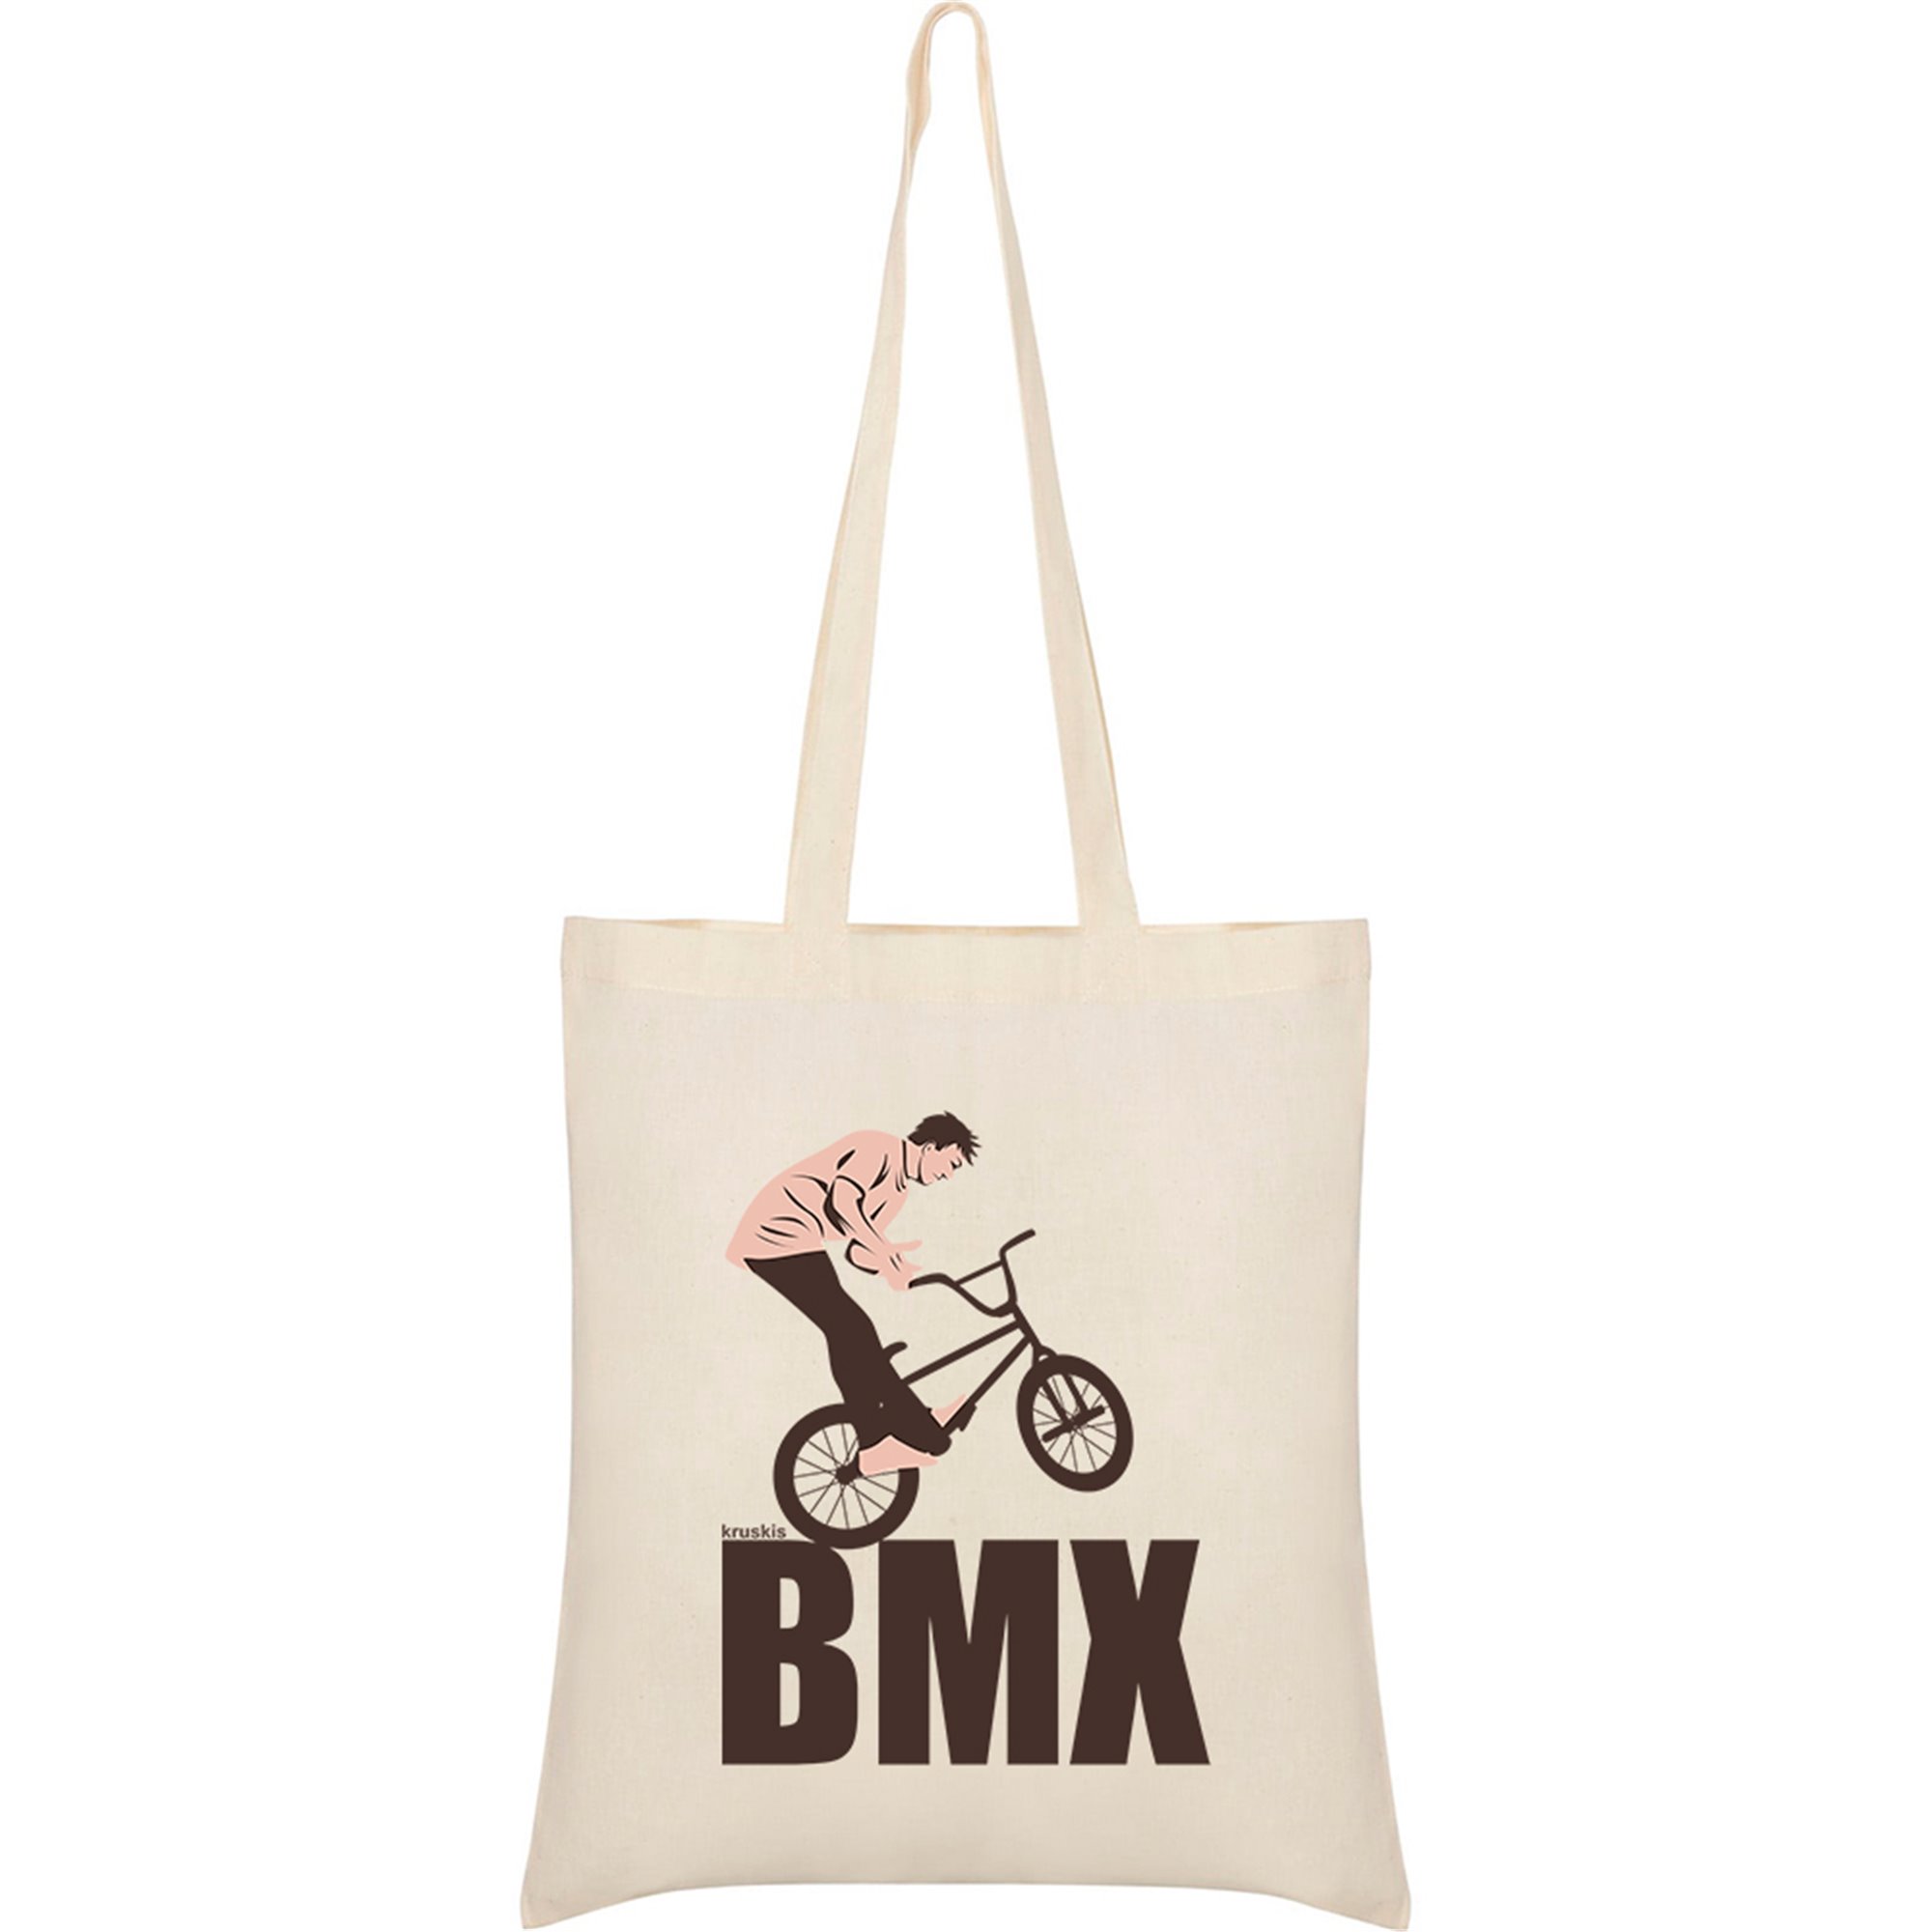 Tas Katoen BMX Trick